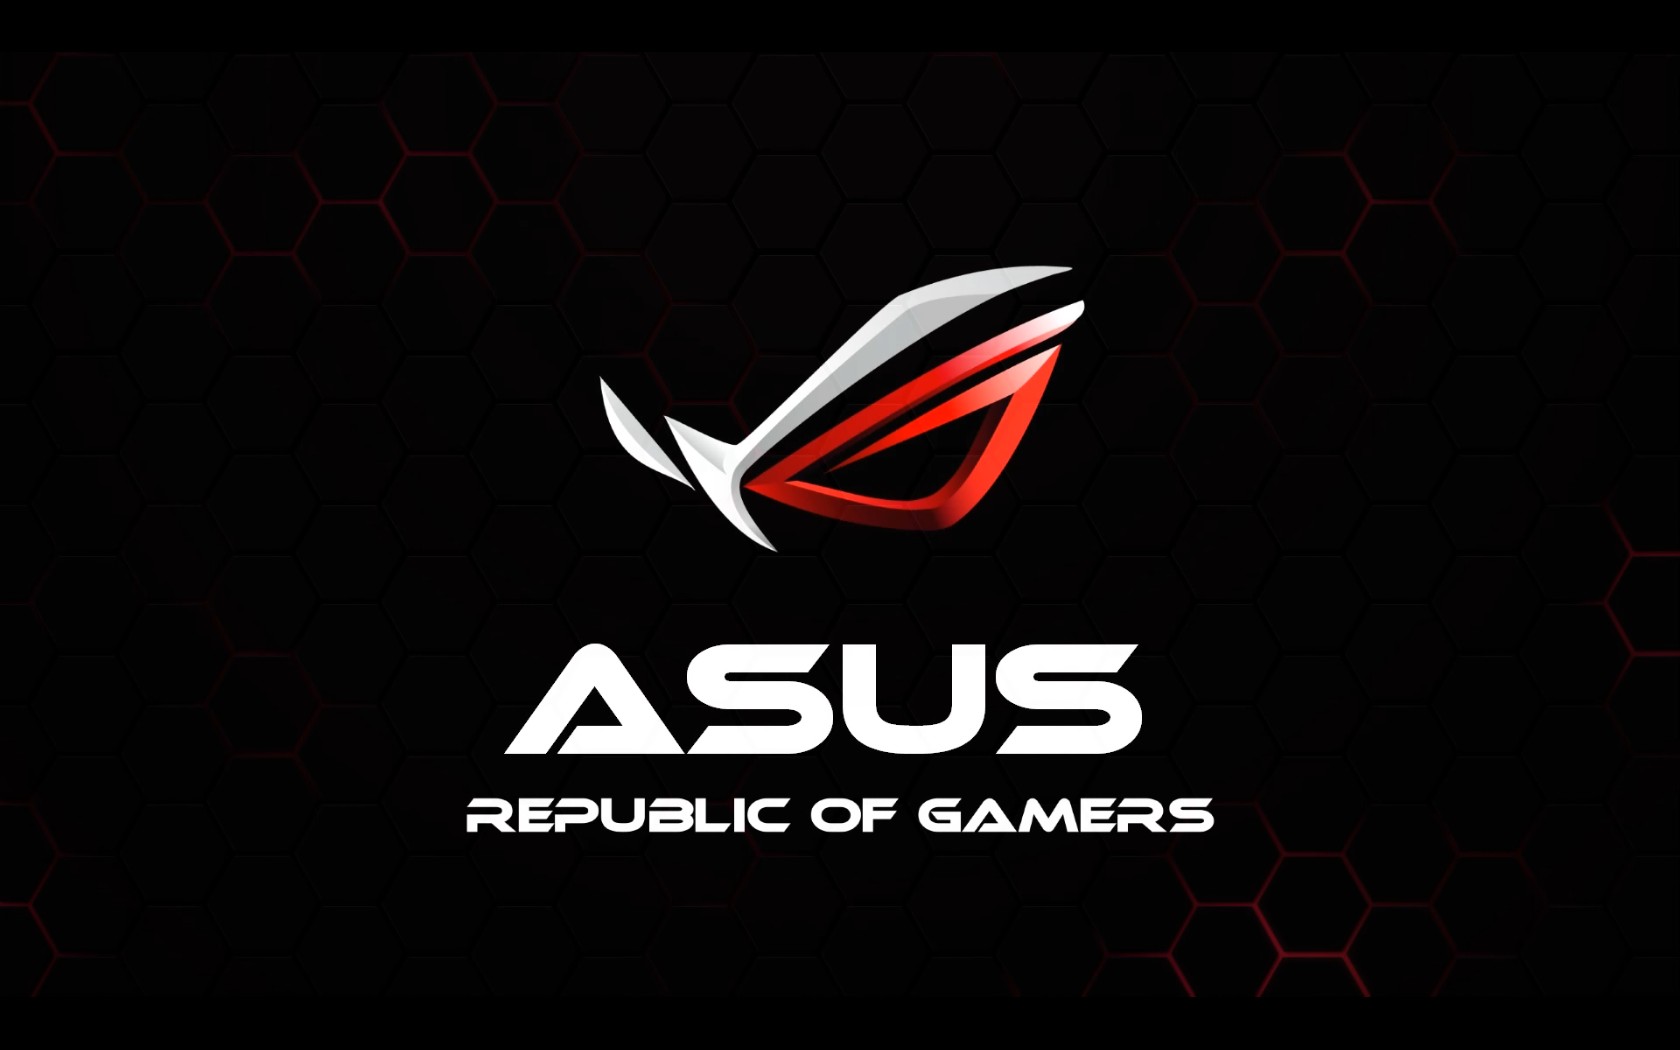 Asus_logo-6.jpg